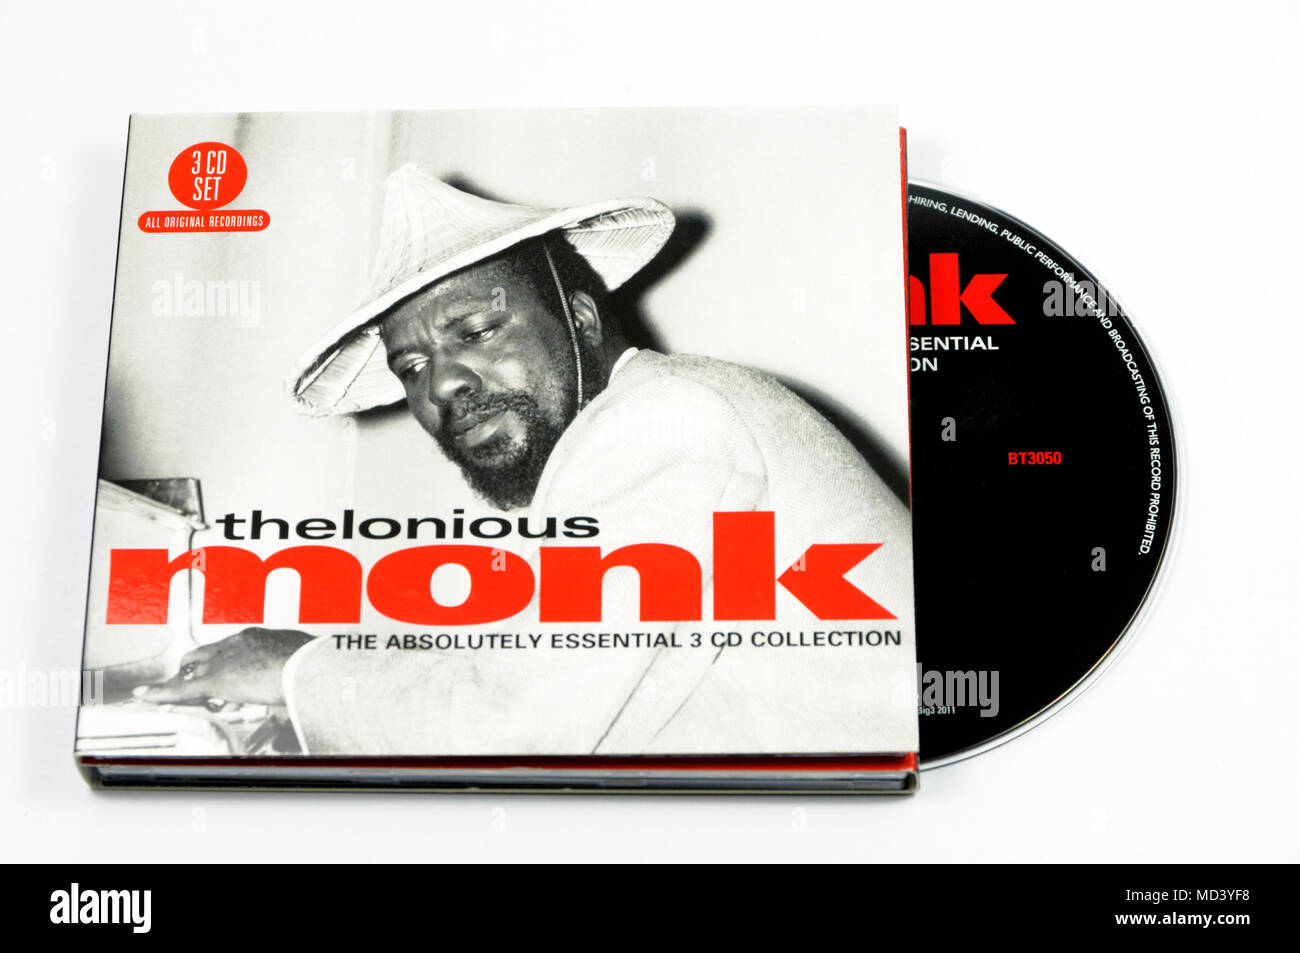 Thelonious Monk Das Unbedingt 3 CD-Sammlung album Stockfoto